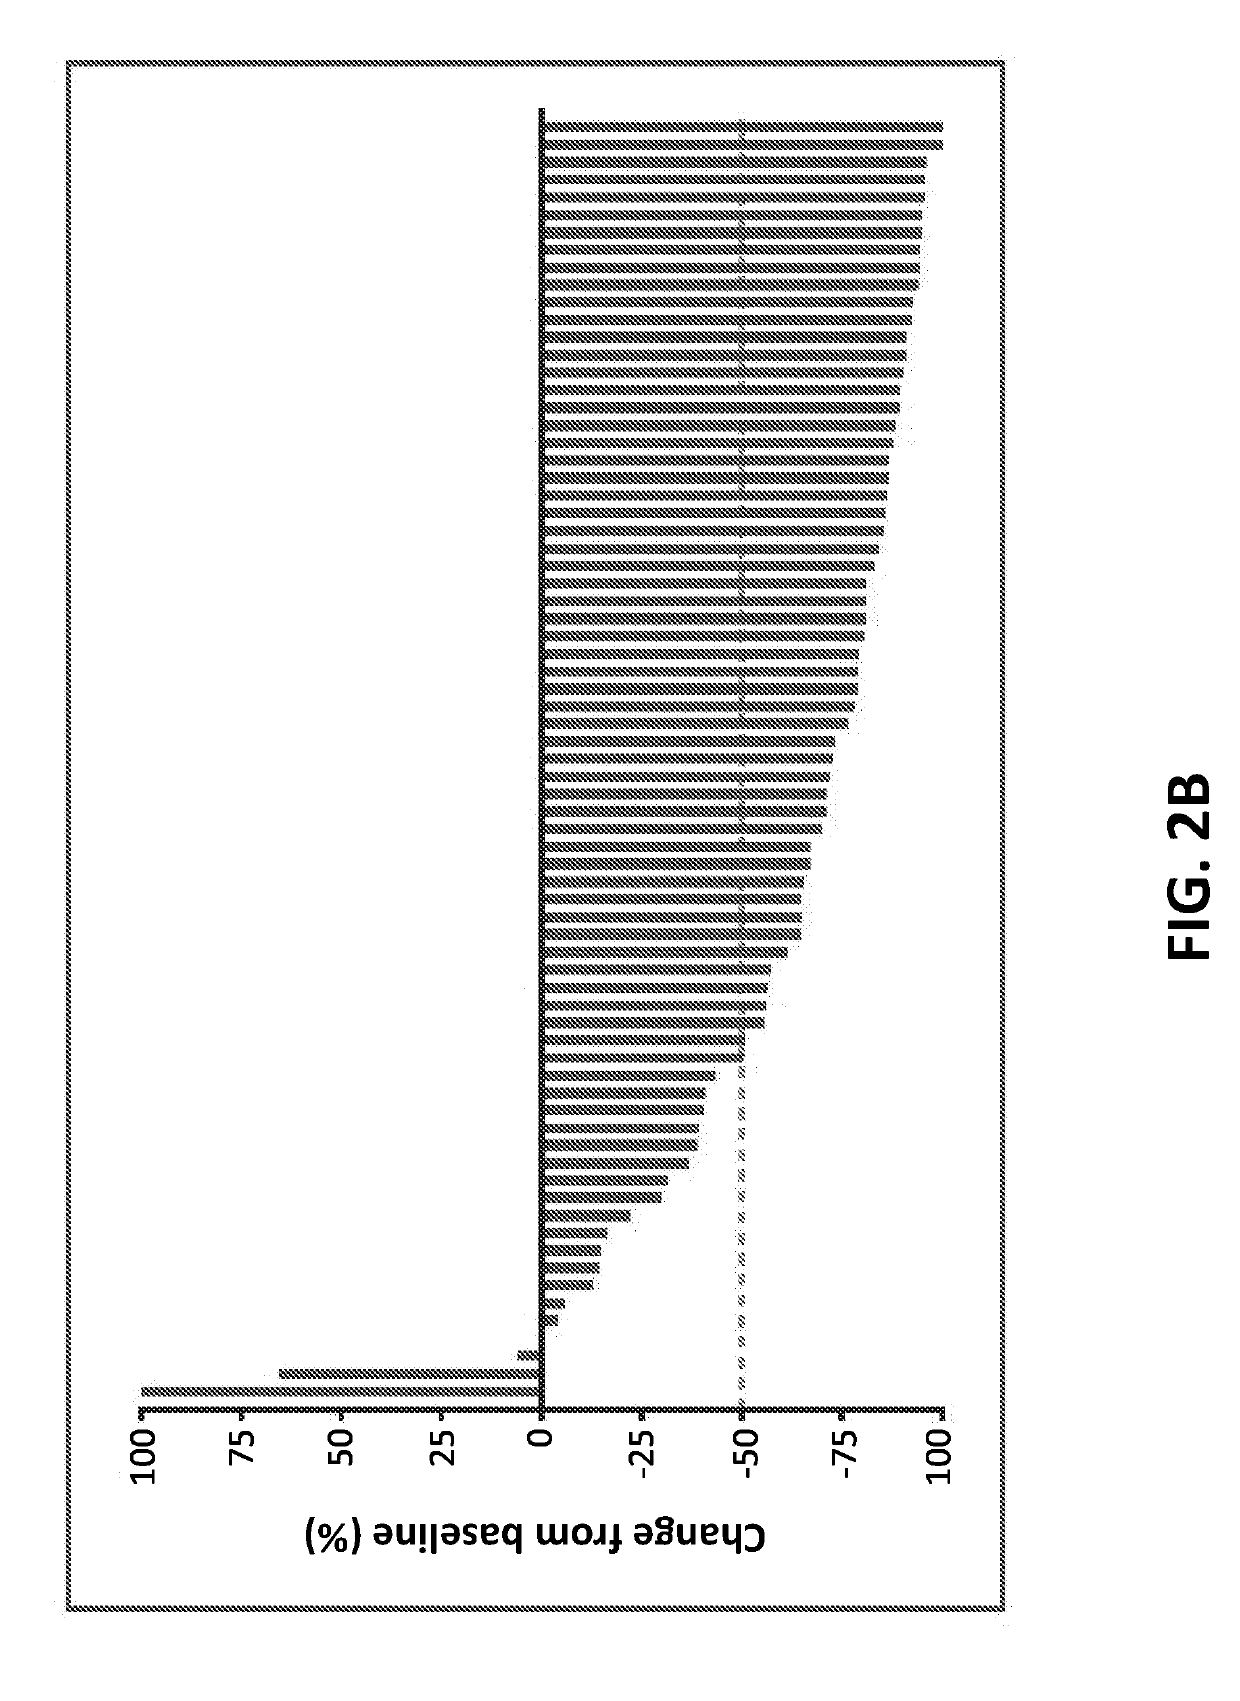 Treatment of hodgkin lymphoma using an Anti-pd-1 antibody